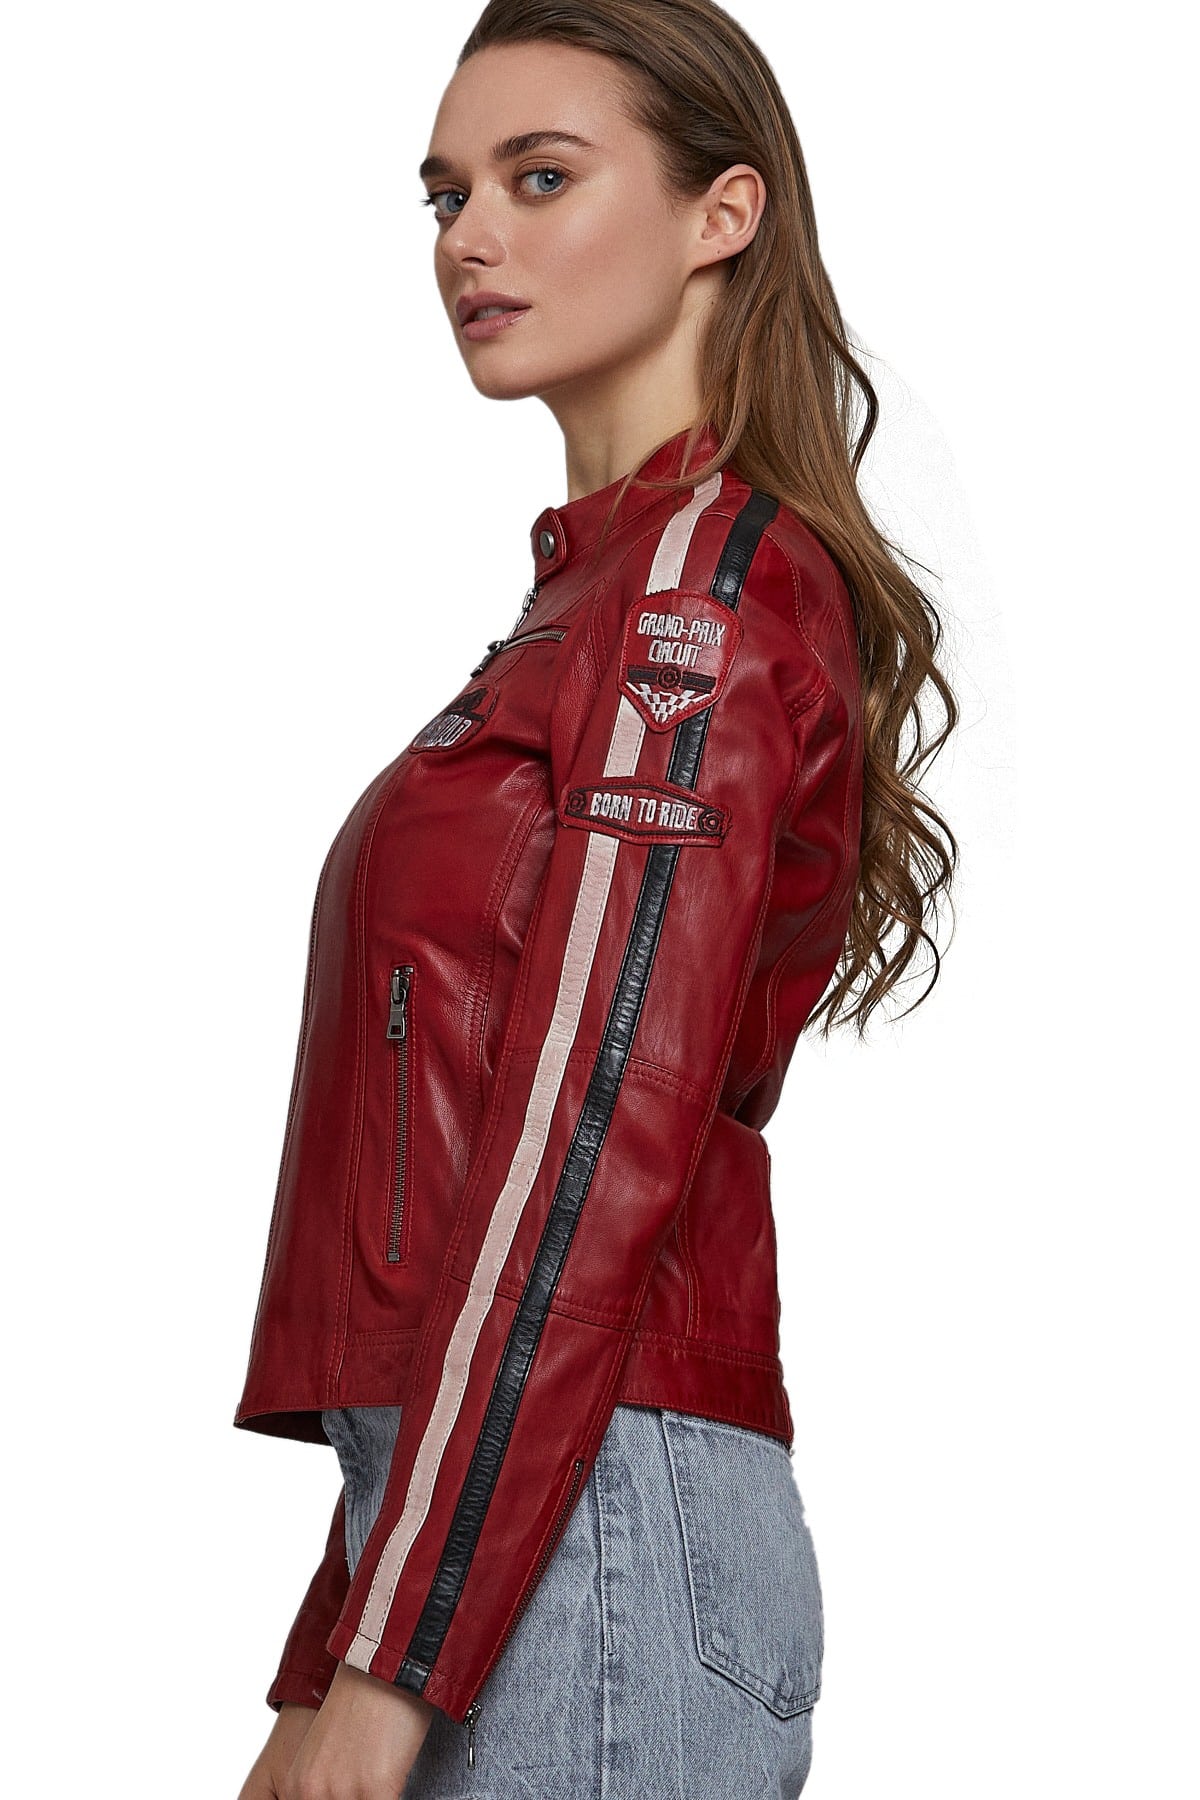 Dark Red Leather Jacket for Ladies in El Paso